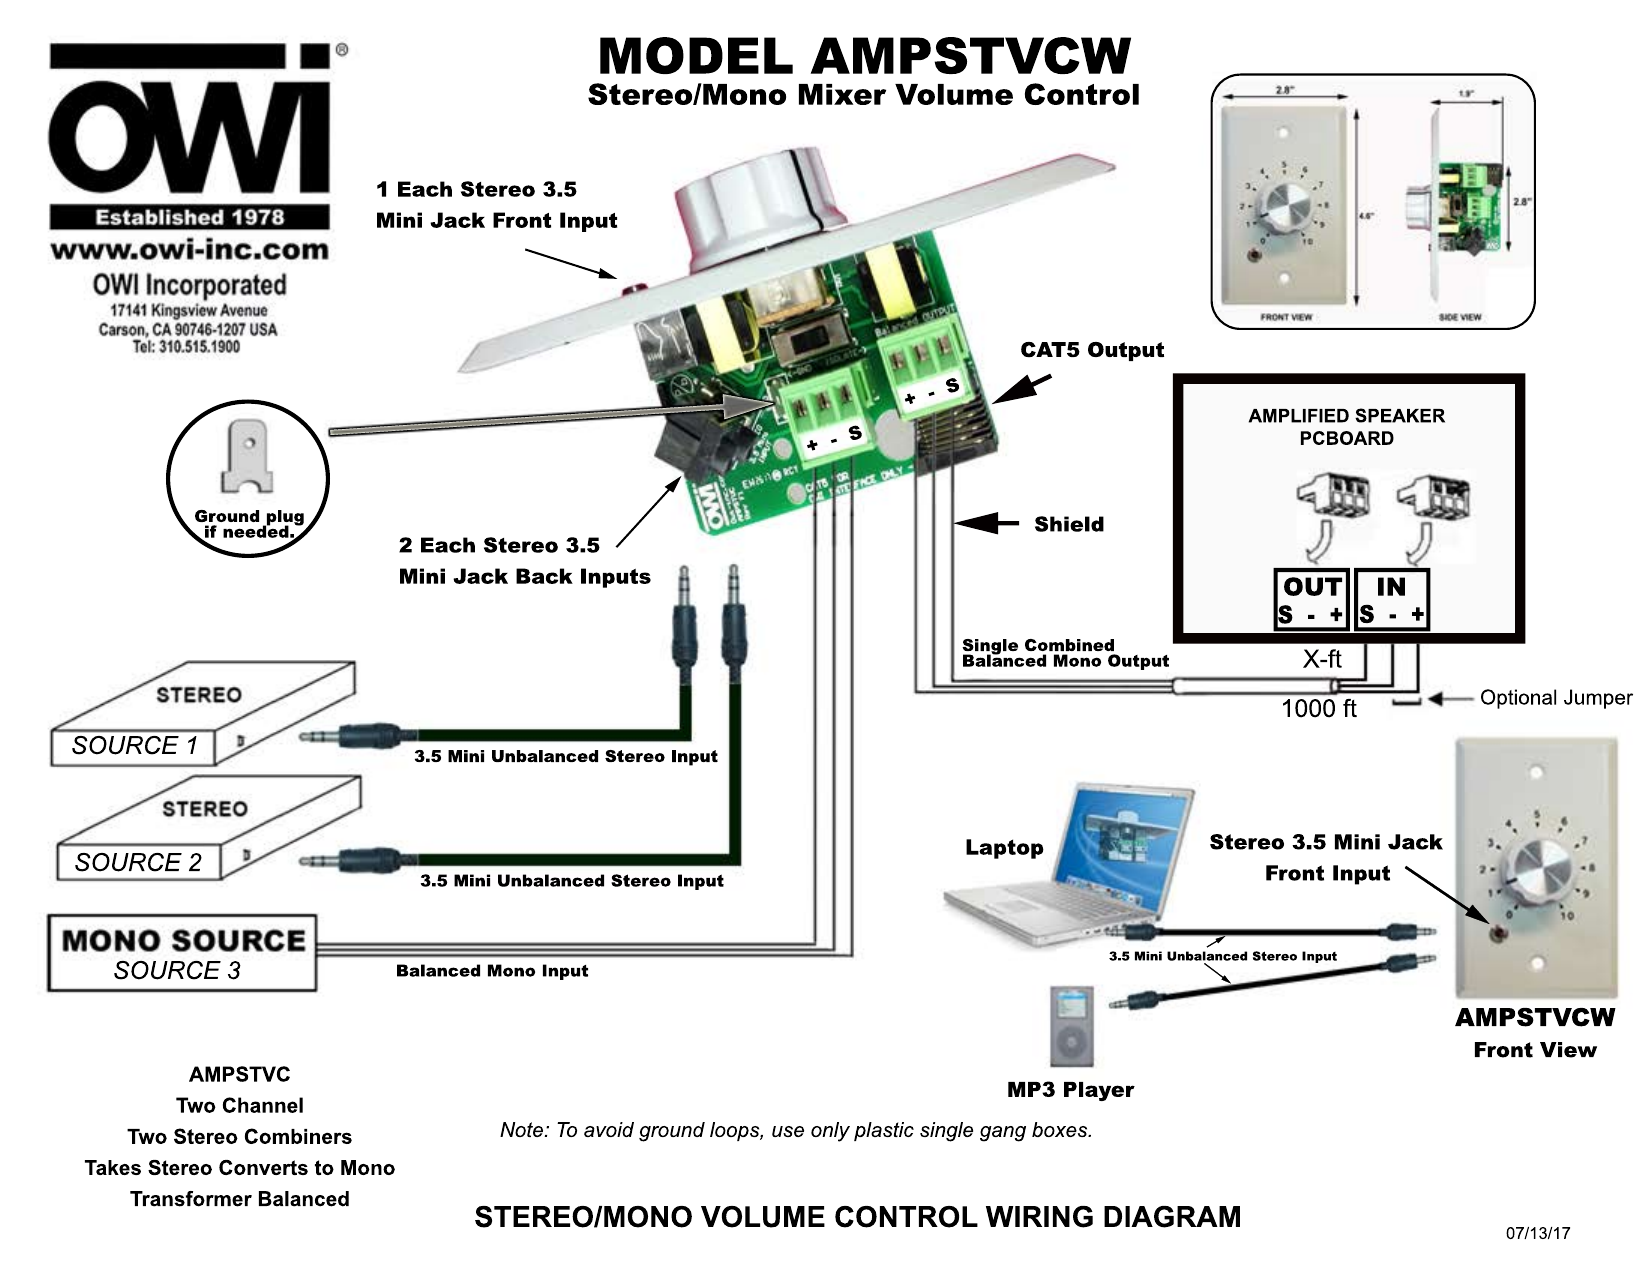 Owi Ampstvcw Wiring Diagram Manualzz